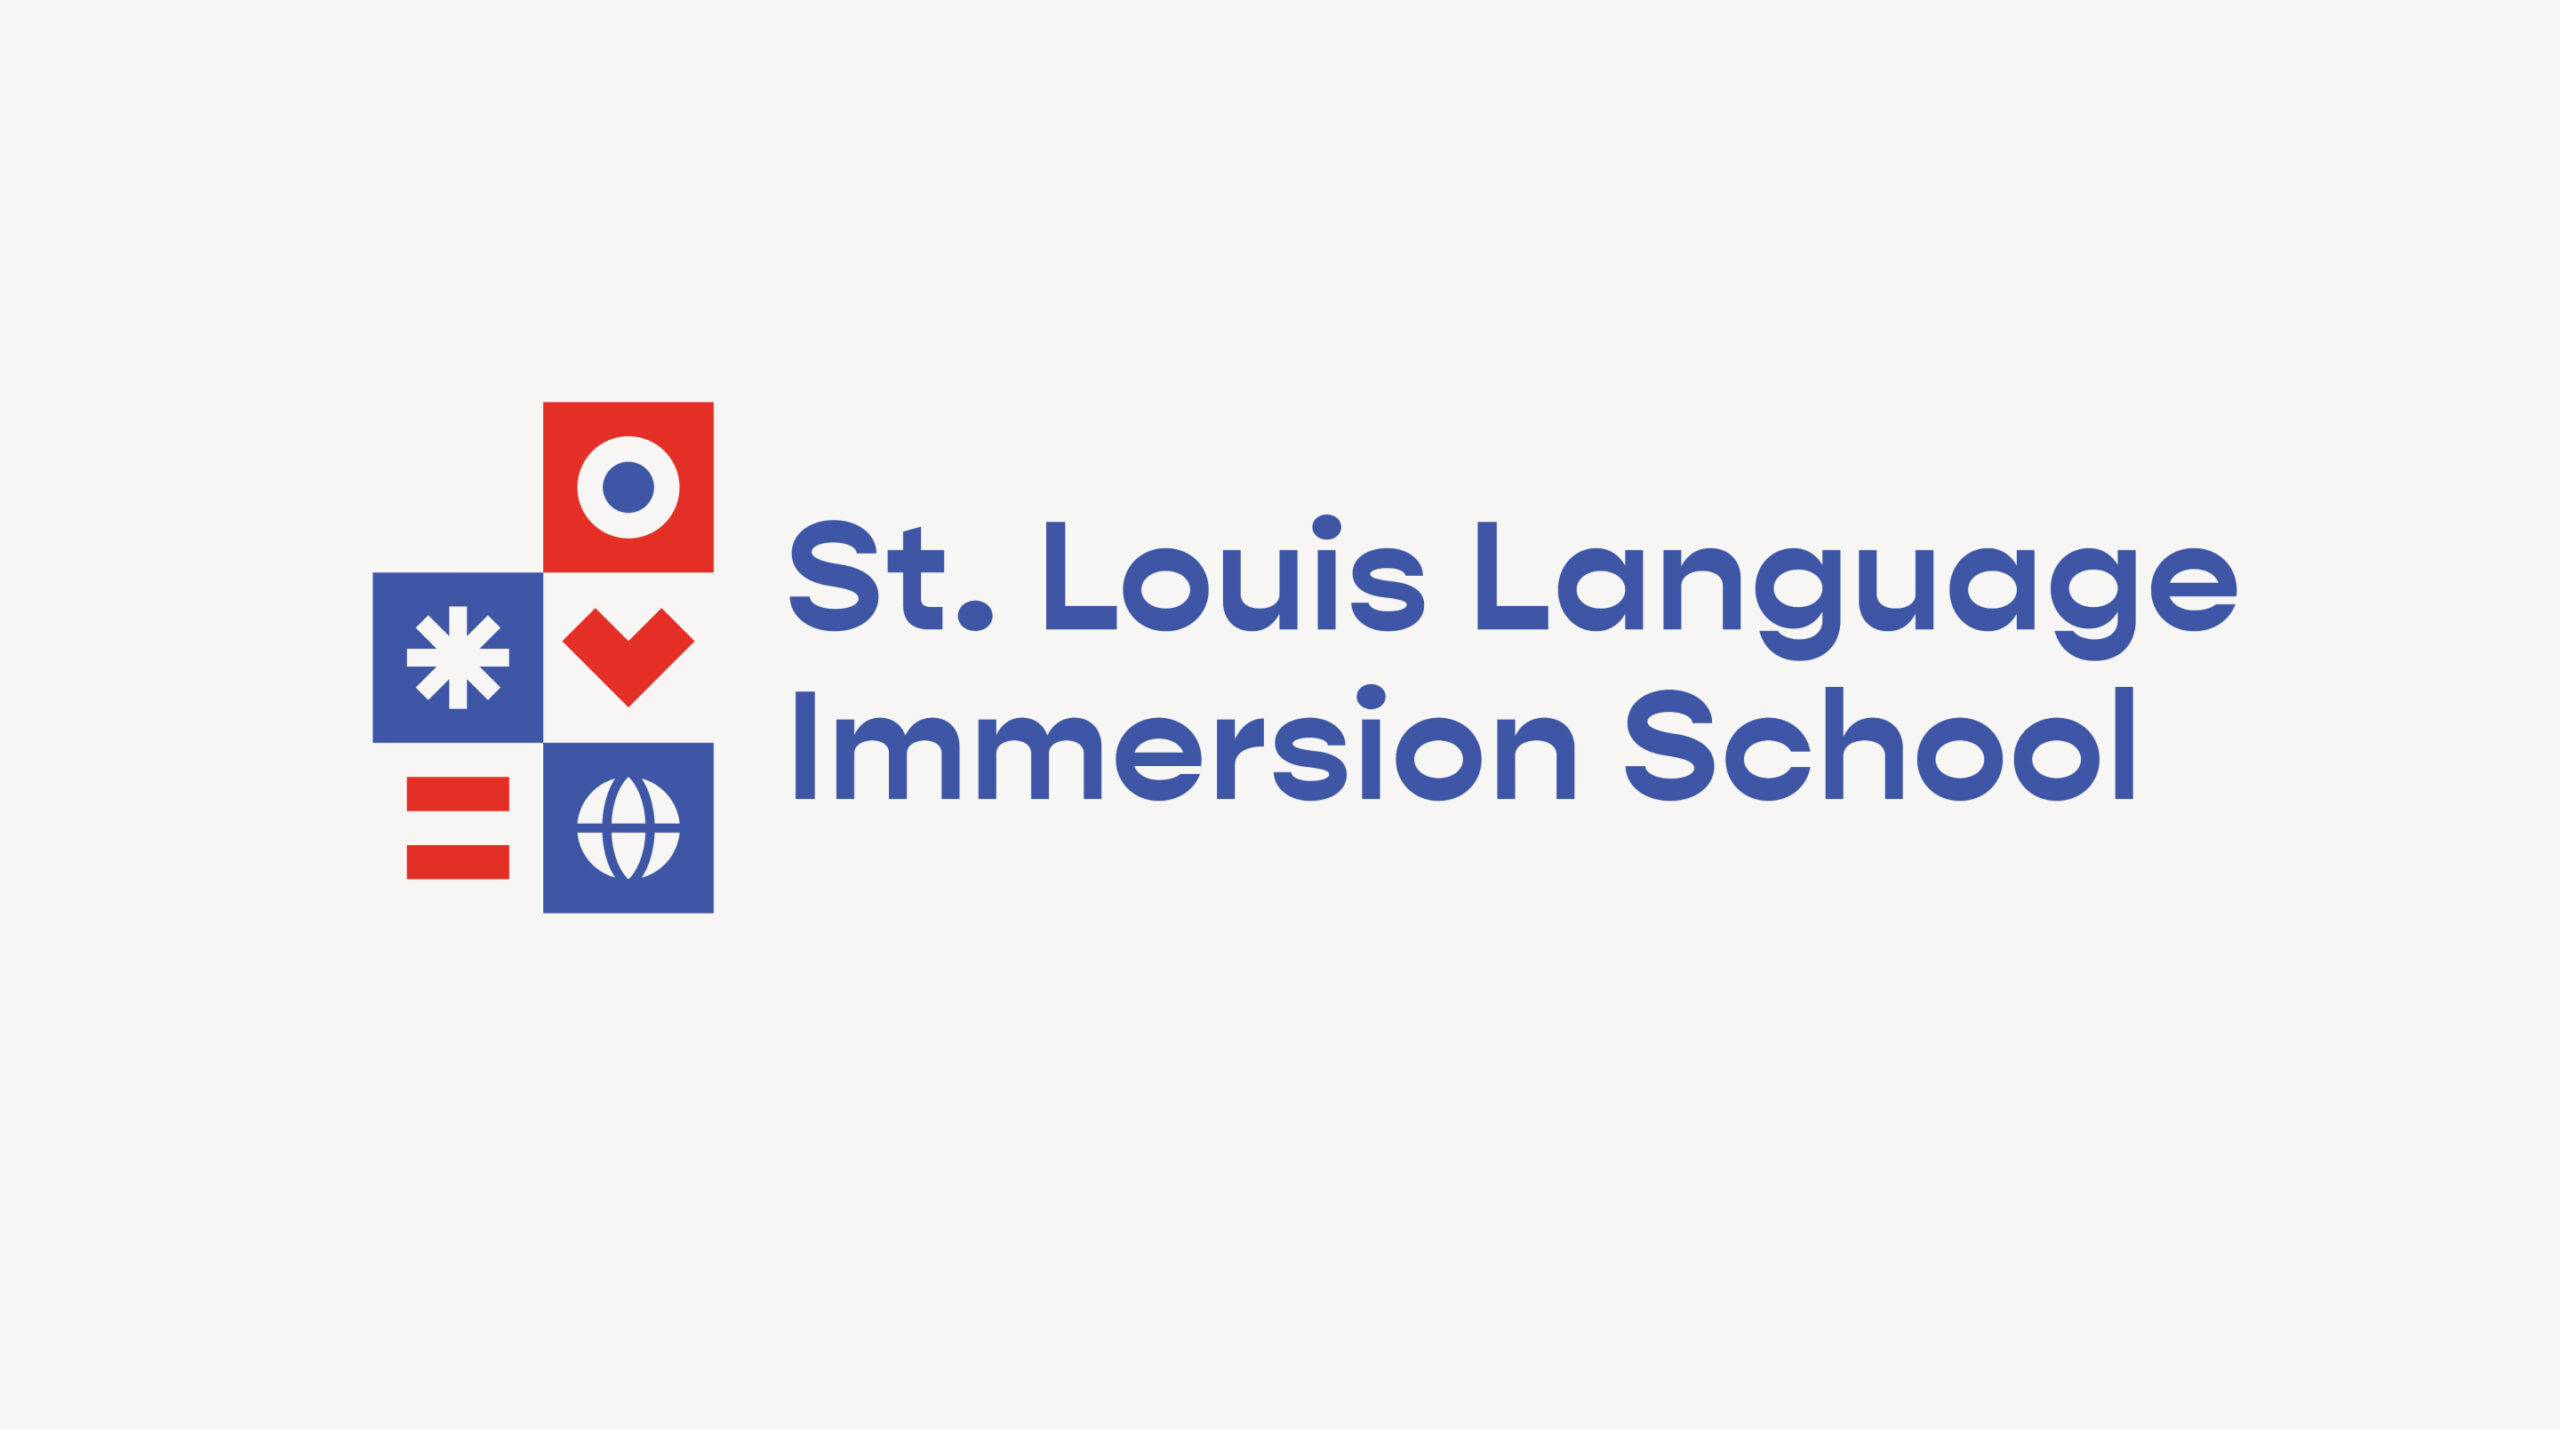 St. Louis Language Immersion School branded logo